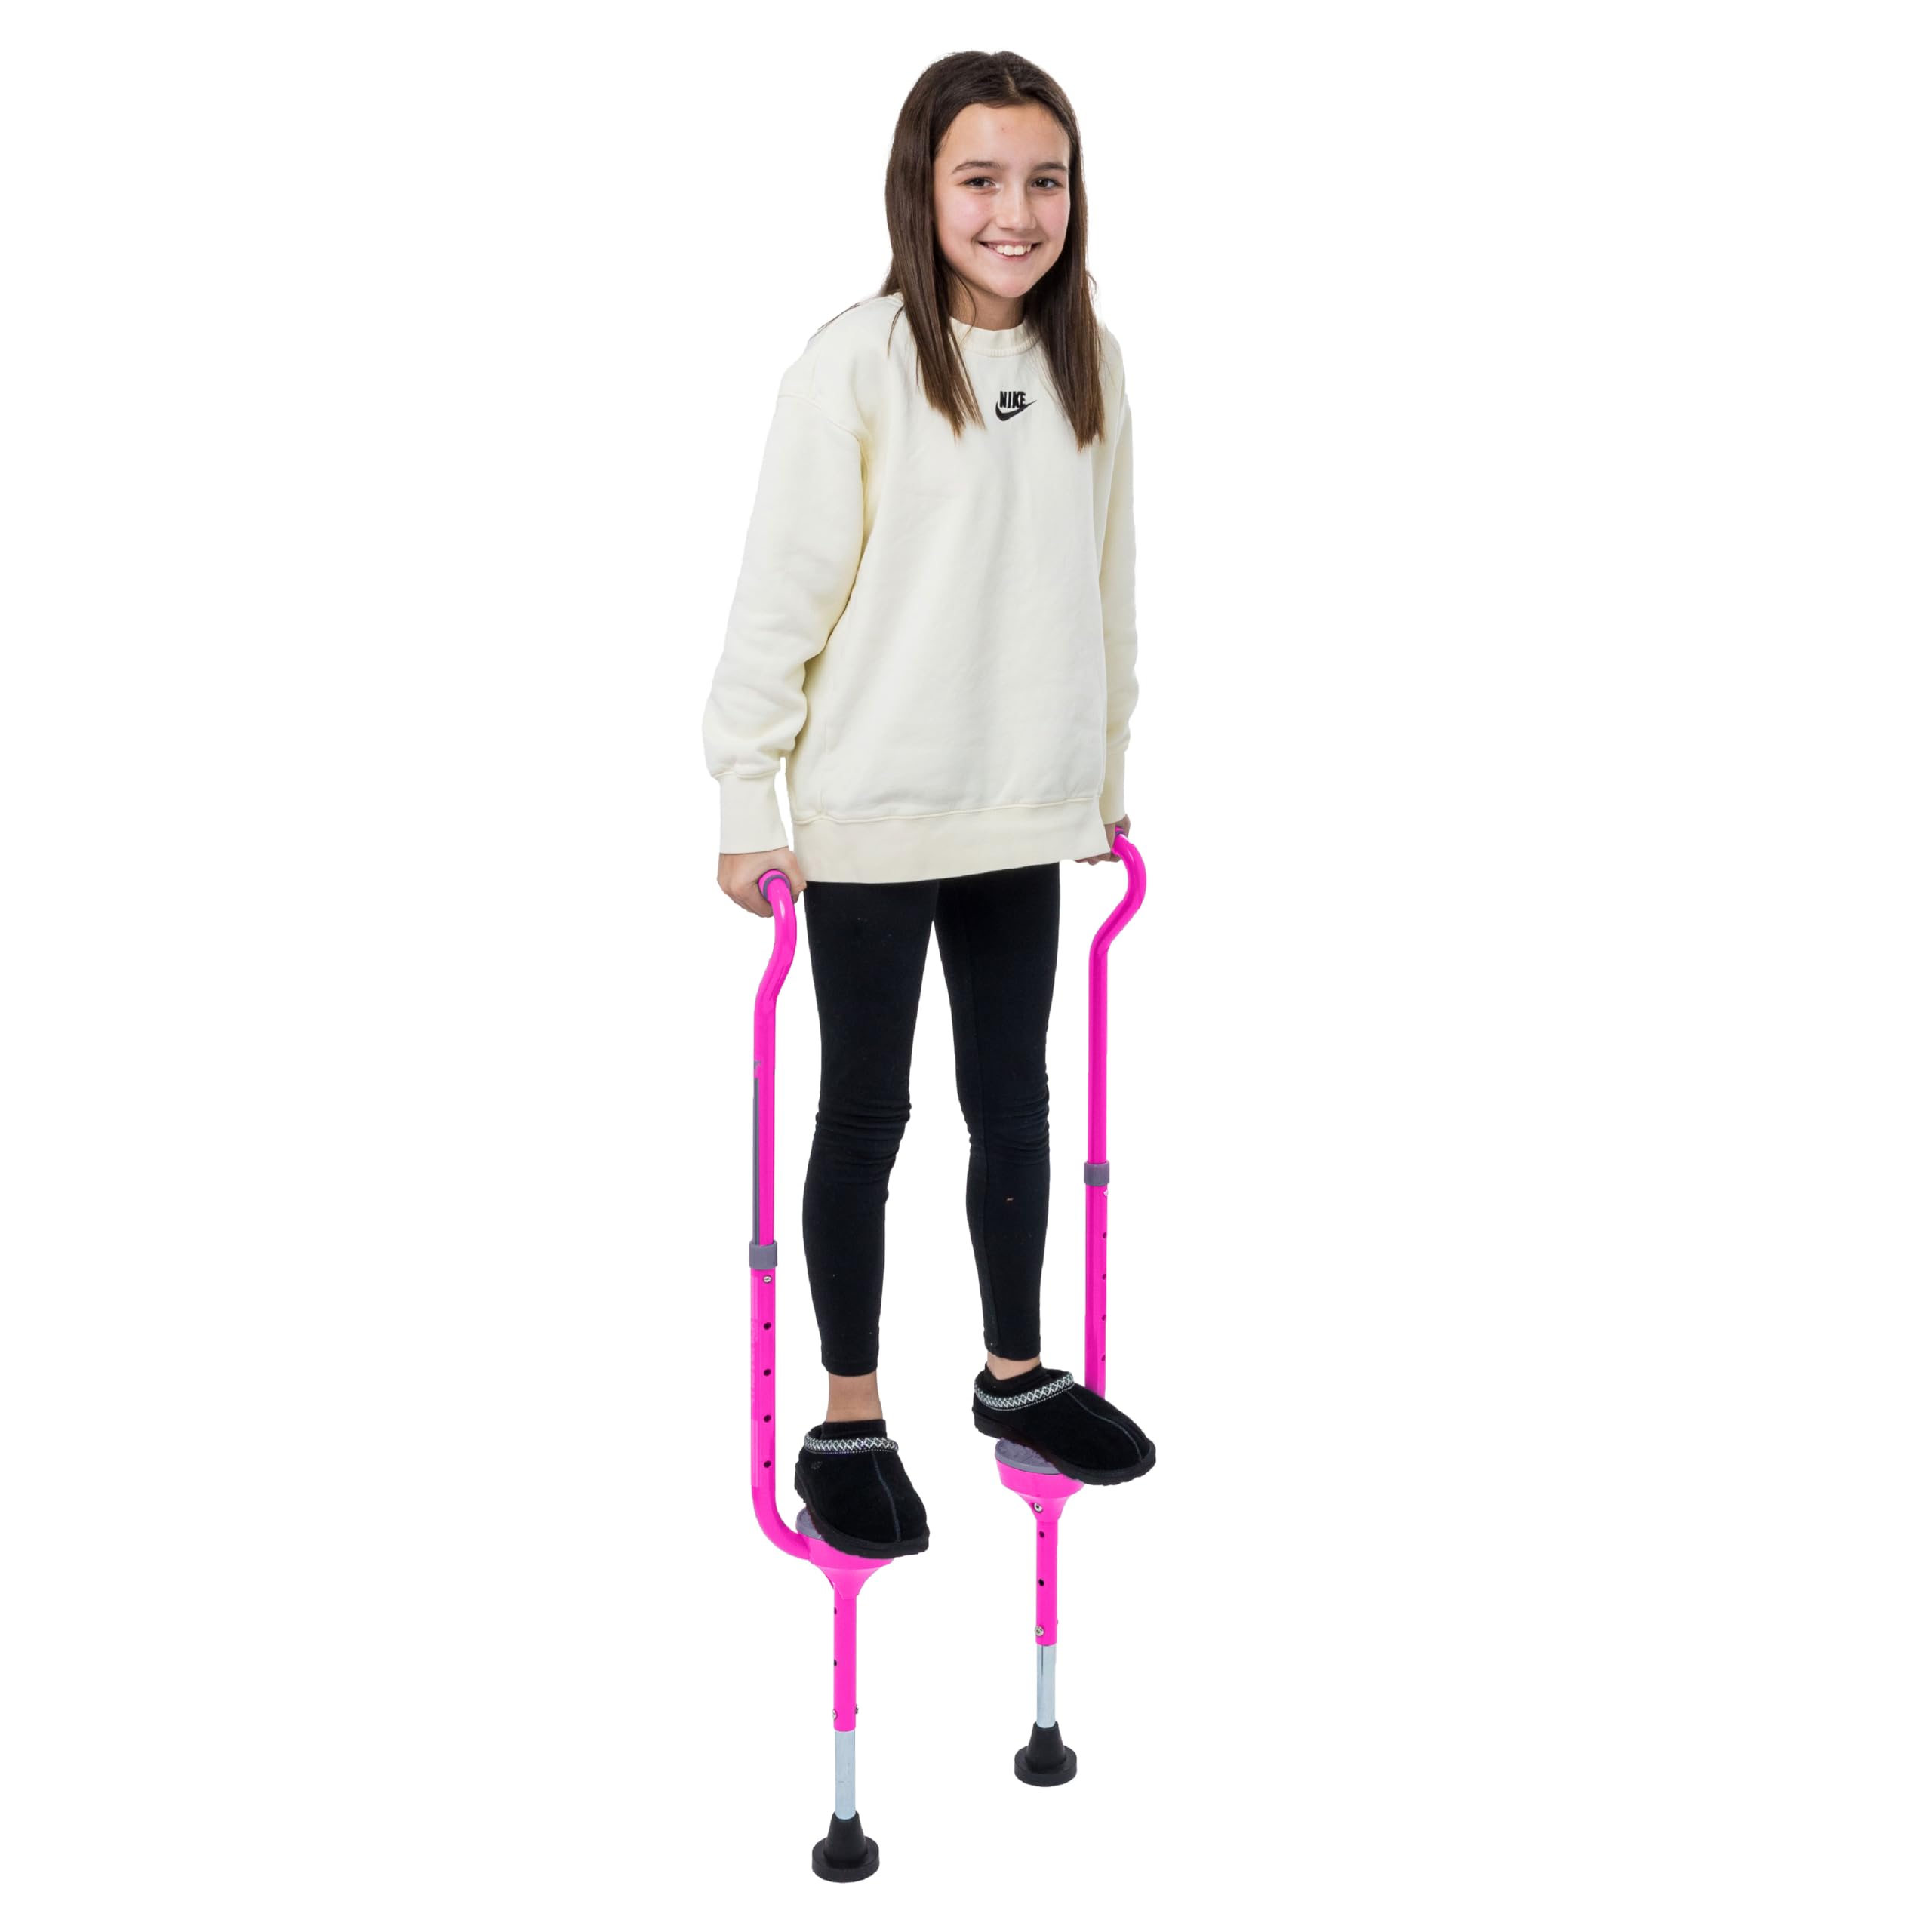 Flybar Maverick Walking Stilts for Kids - 5 Adjustable Height’s, Sturdy, Easy Assembly, Wide Non-Slip Rubber Bottom Tip, Foam Grips, Outdoor Toys for Kids 5+, 190 lbs